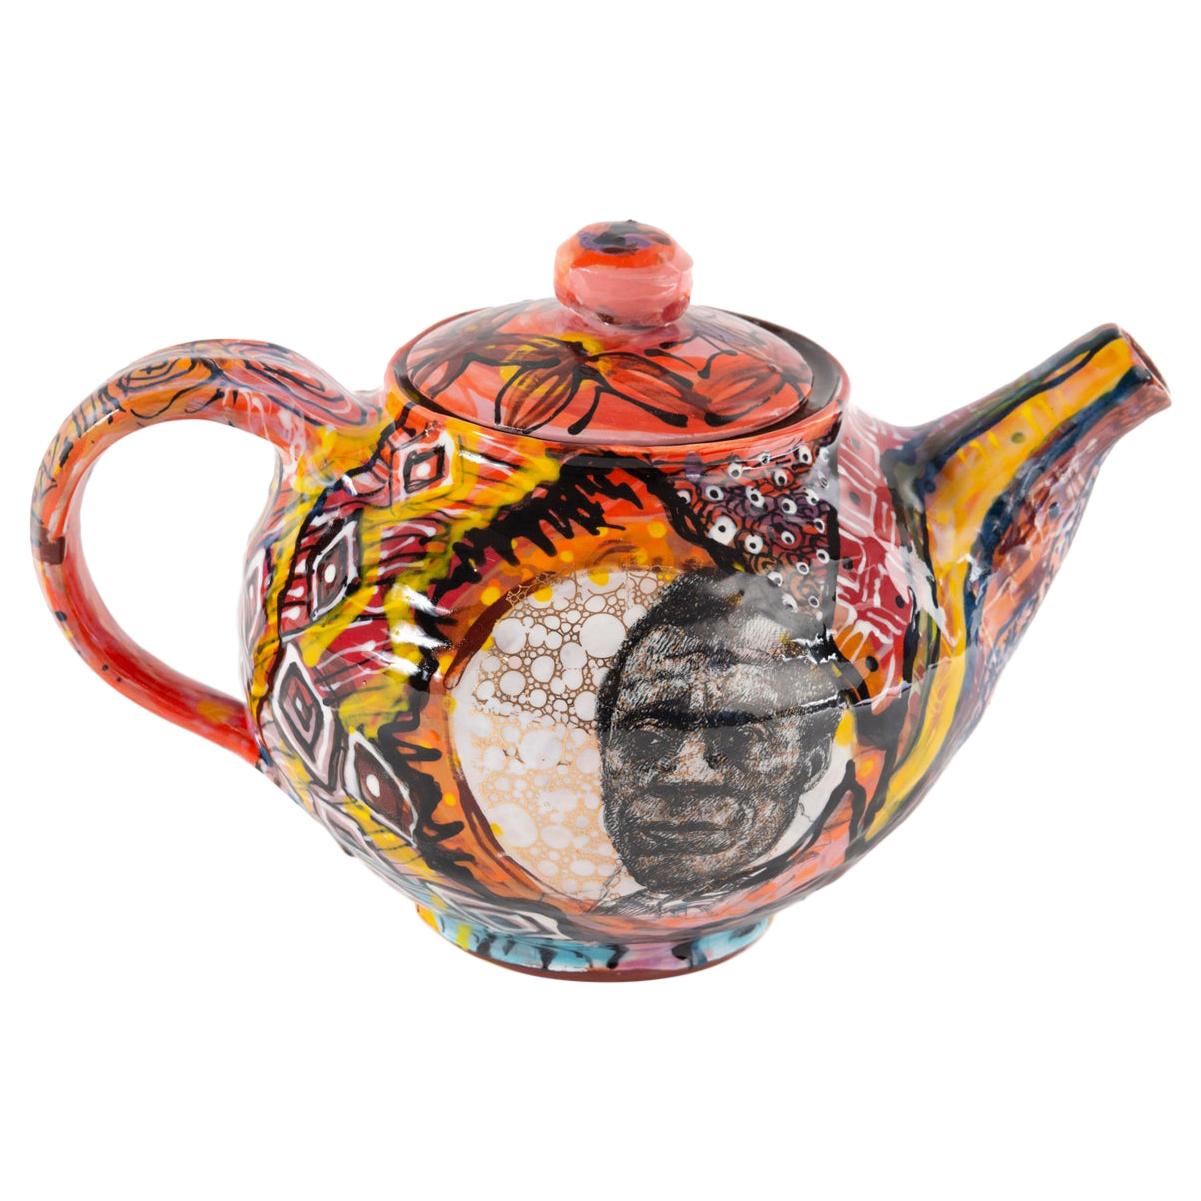 James Baldwin Teapot in Glazed Stoneware by Roberto Lugo